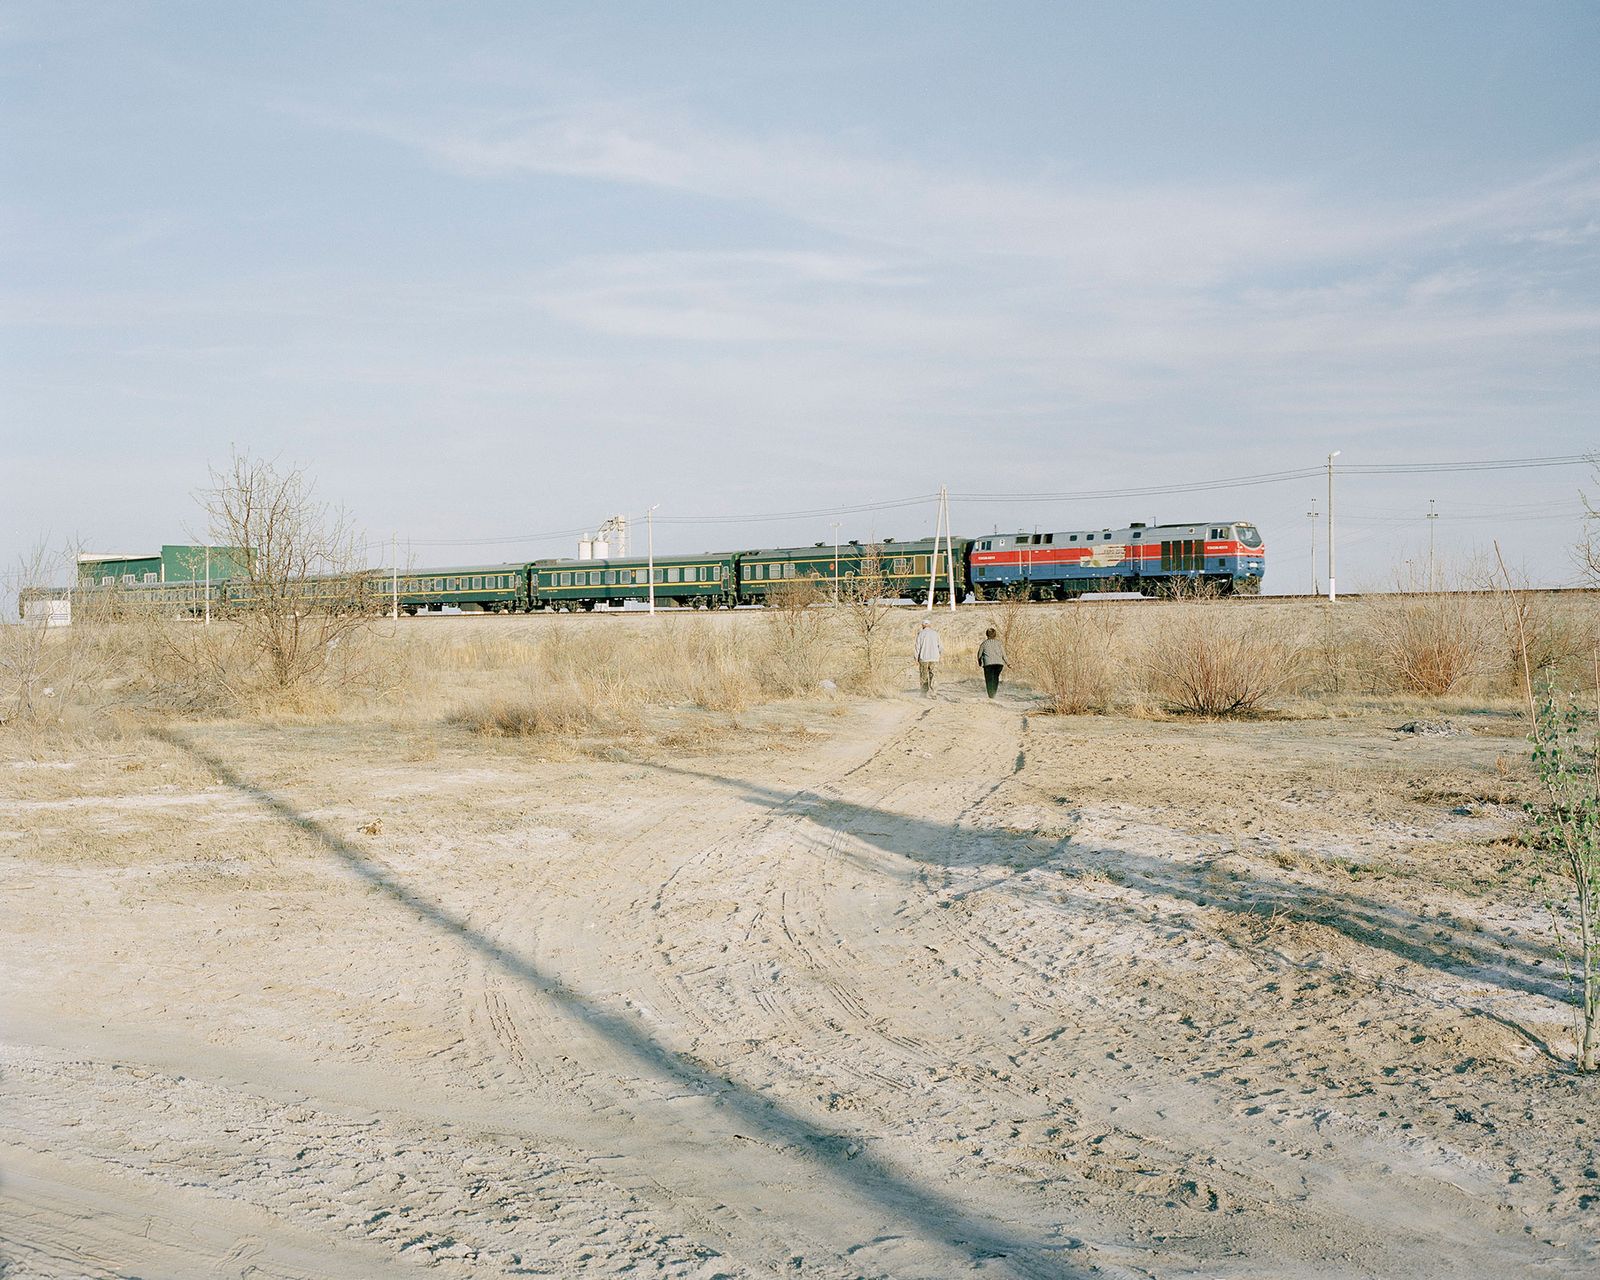 © laurens thys - Empty passenger train